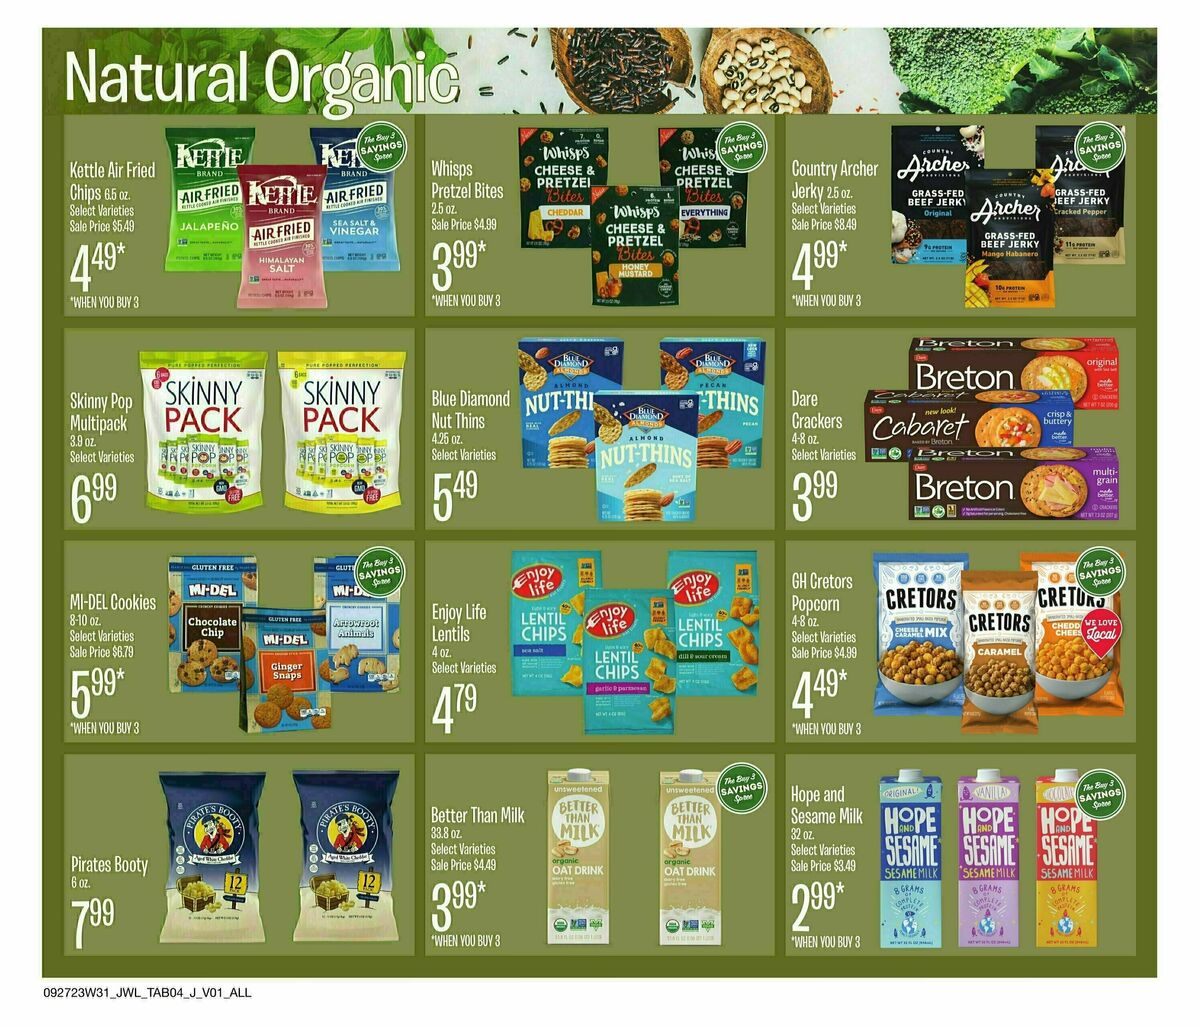 Jewel Osco Natural & Organics Weekly Ad from September 27